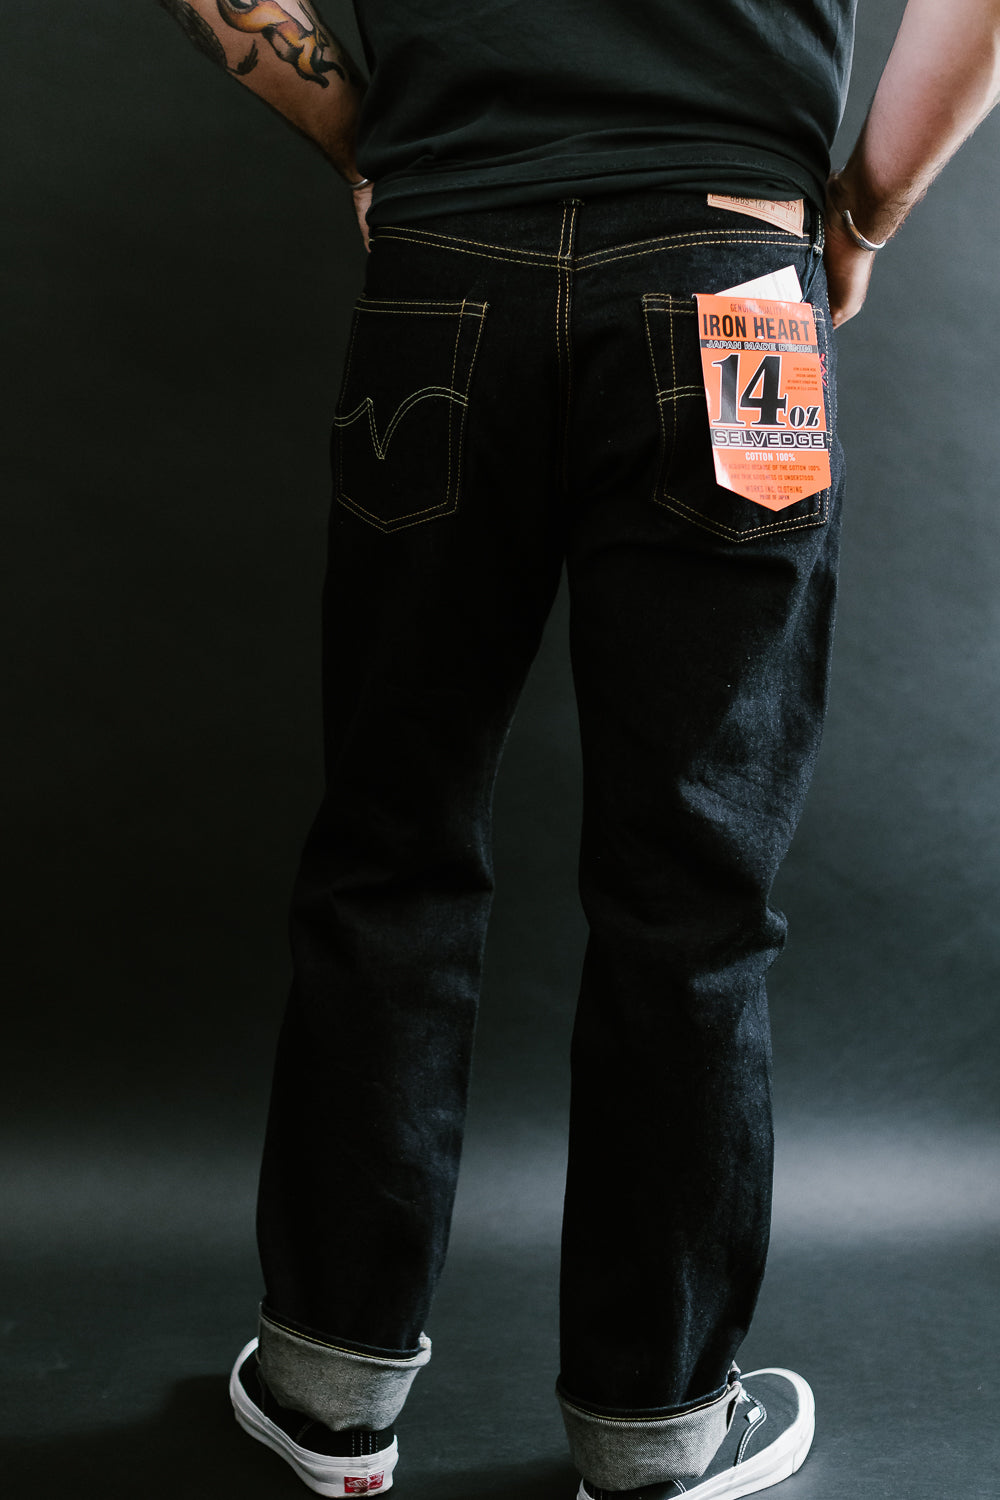 IH-888S-142 - 14oz Selvedge Denim Medium/High Rise Tapered Cut Jeans - Indigo